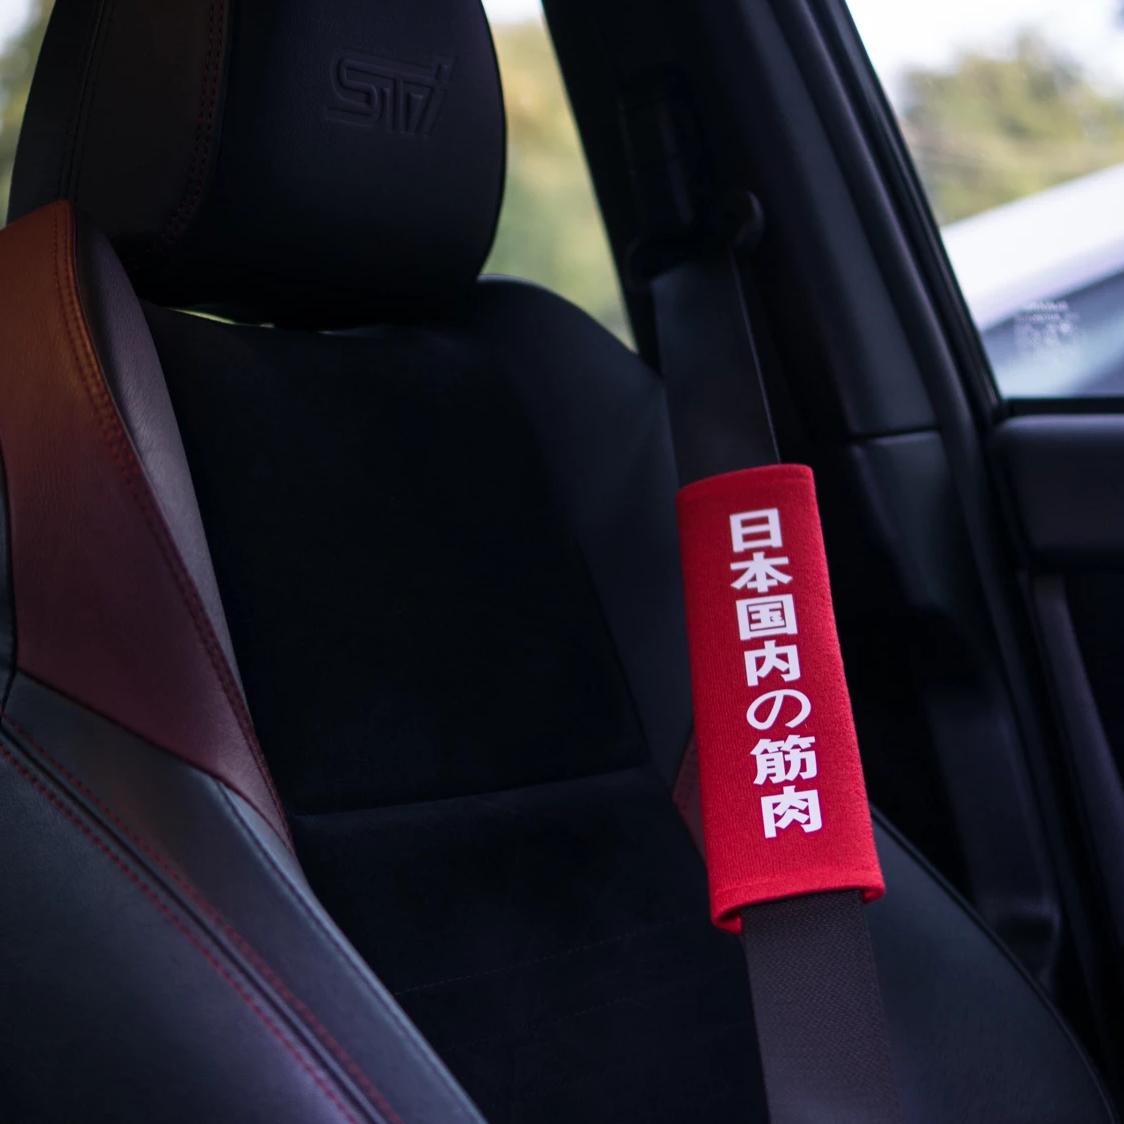 JDMuscle seatbelt shoulder pad - 日本の国内筋肉 -Red-JDM-SB-RD-JDM-SB-RD-Harness Pads-JDMuscle-Red-JDMuscle